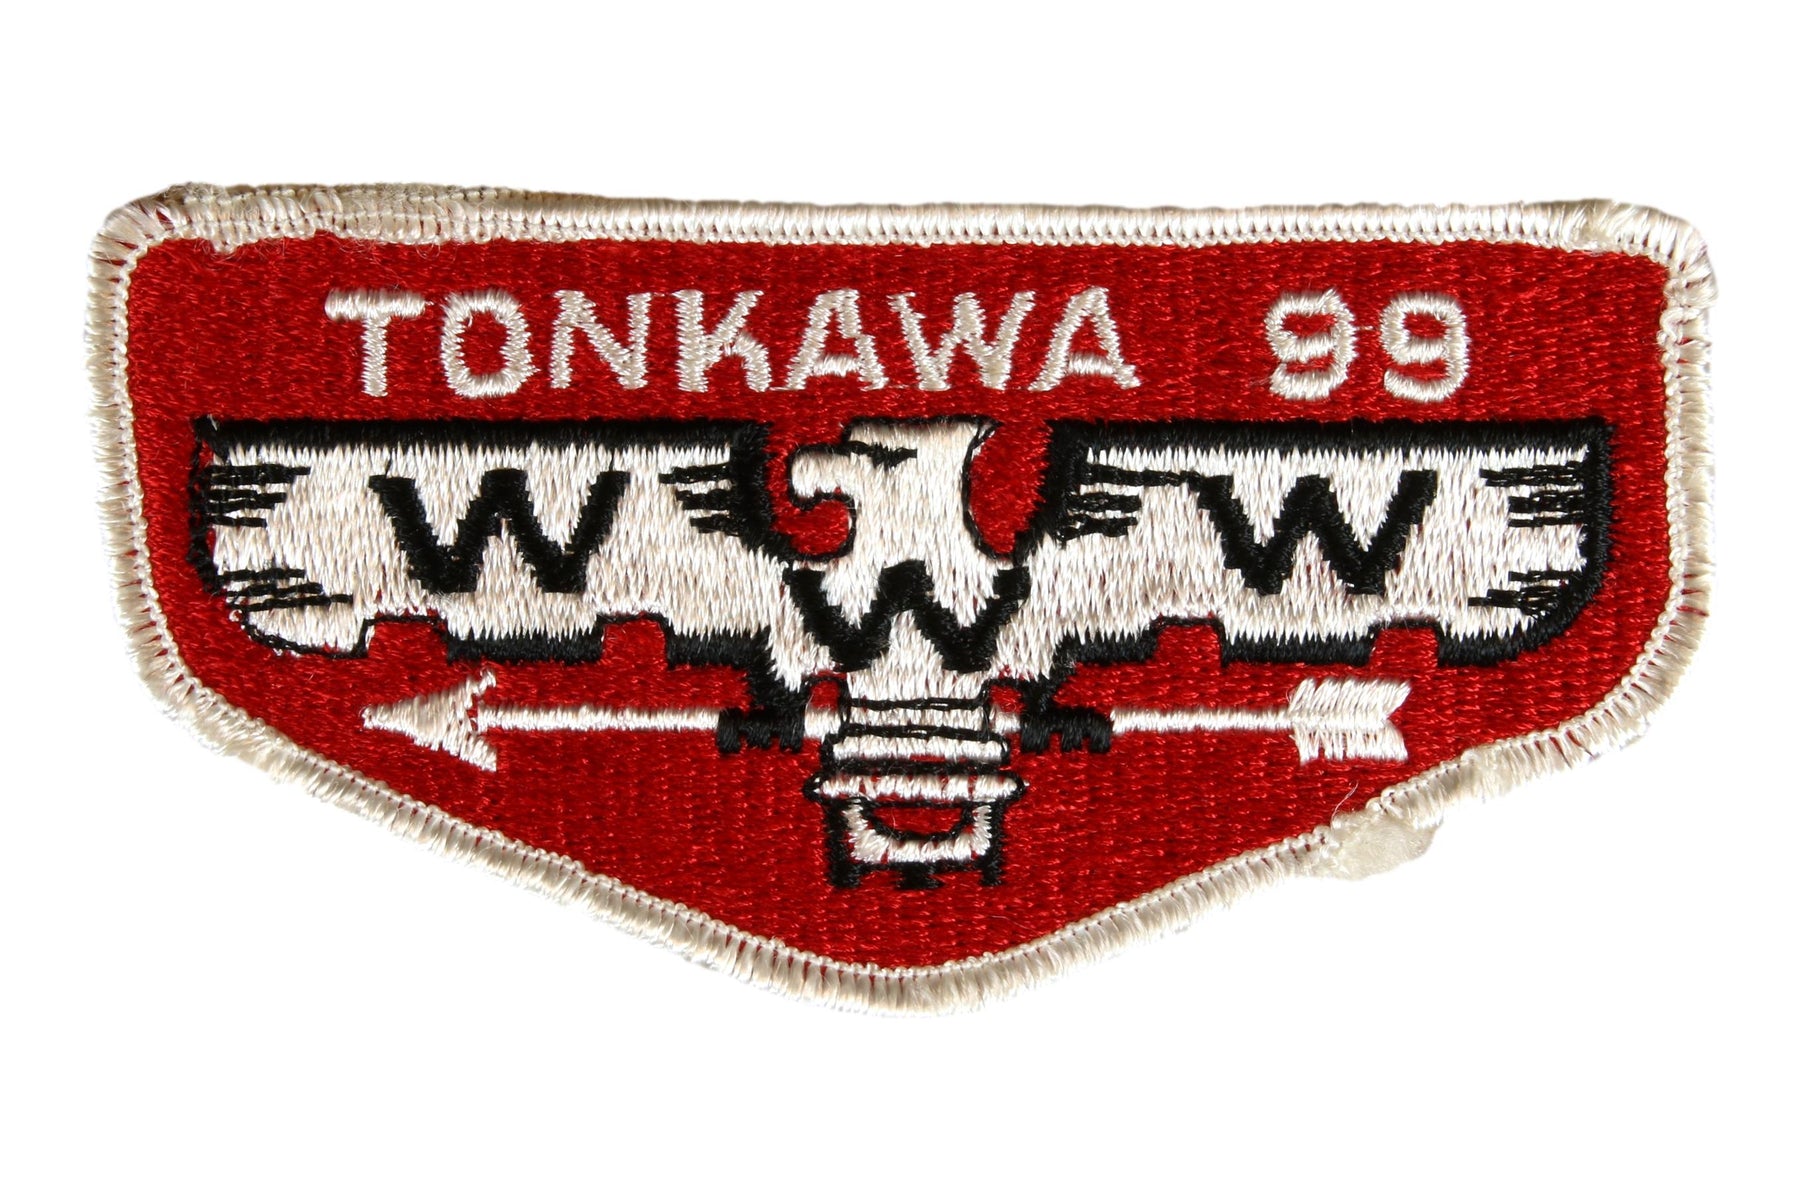 Lodge 99 Tonkawa Flap S-3 Used